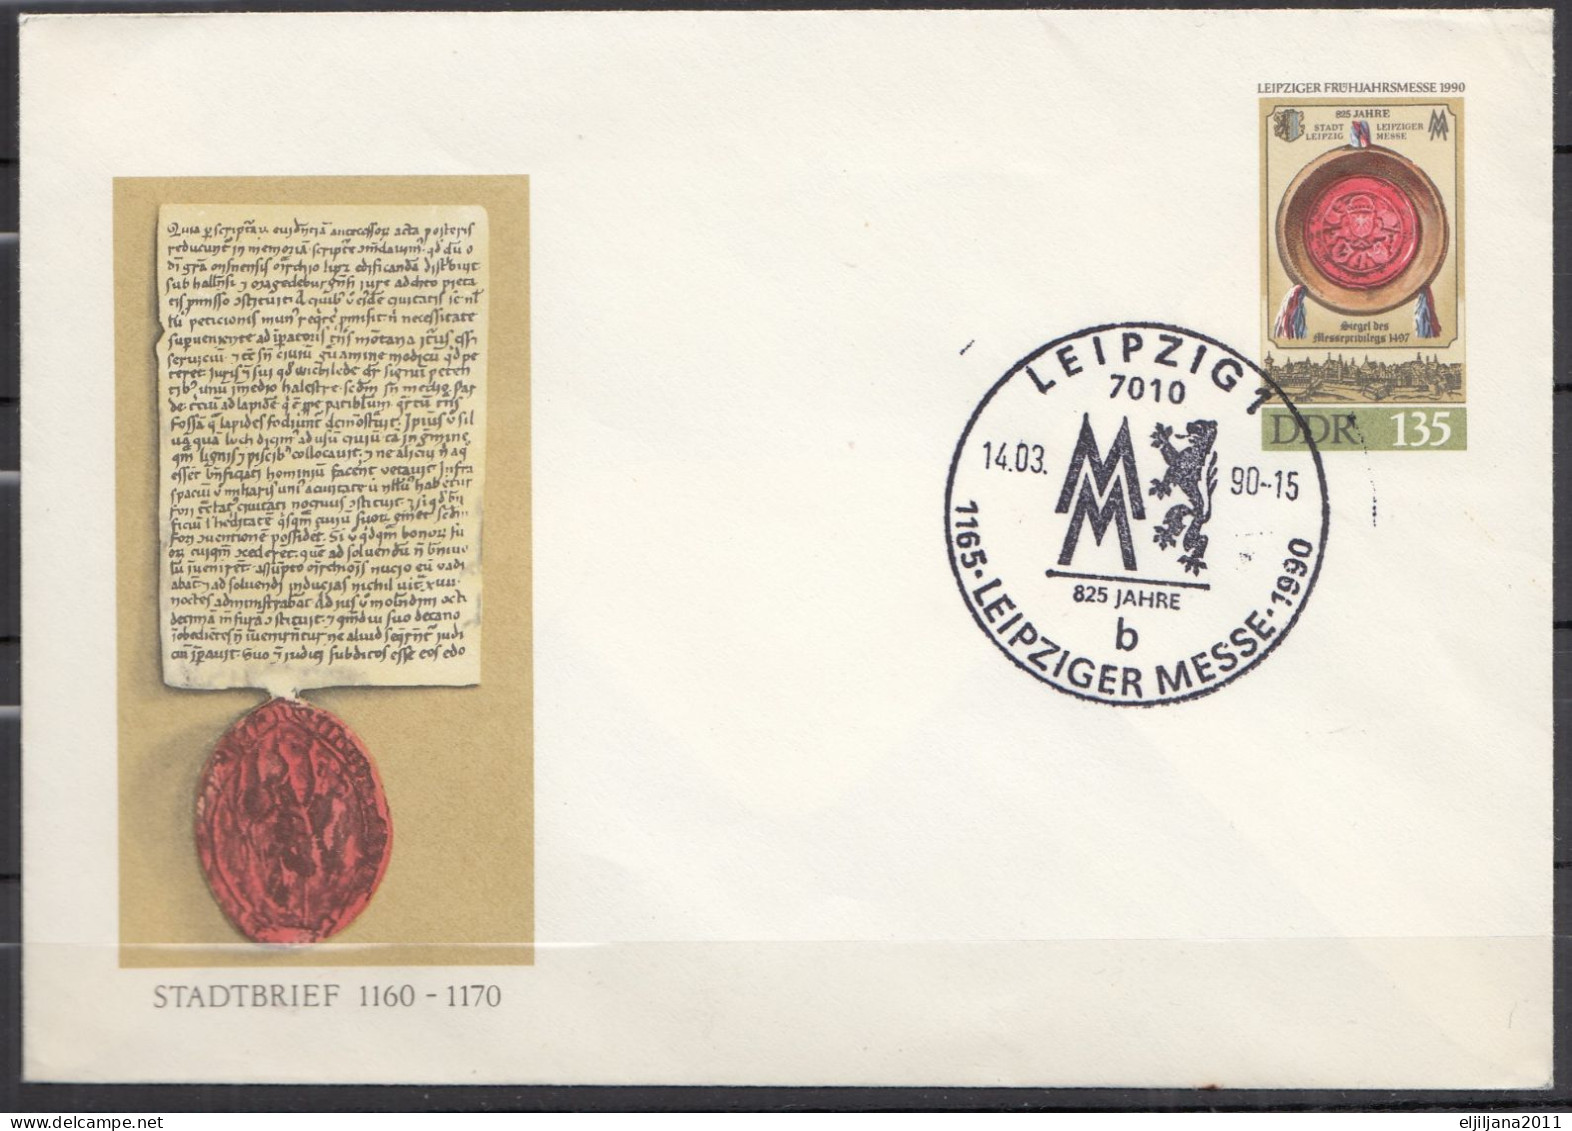 ⁕ Germany DDR 1990 ⁕ "STADTBRIEF 1160-1170" / Leipziger Frühjahrsmesse / Postal Stationery ⁕ 2v Unused Cover - Umschläge - Ungebraucht